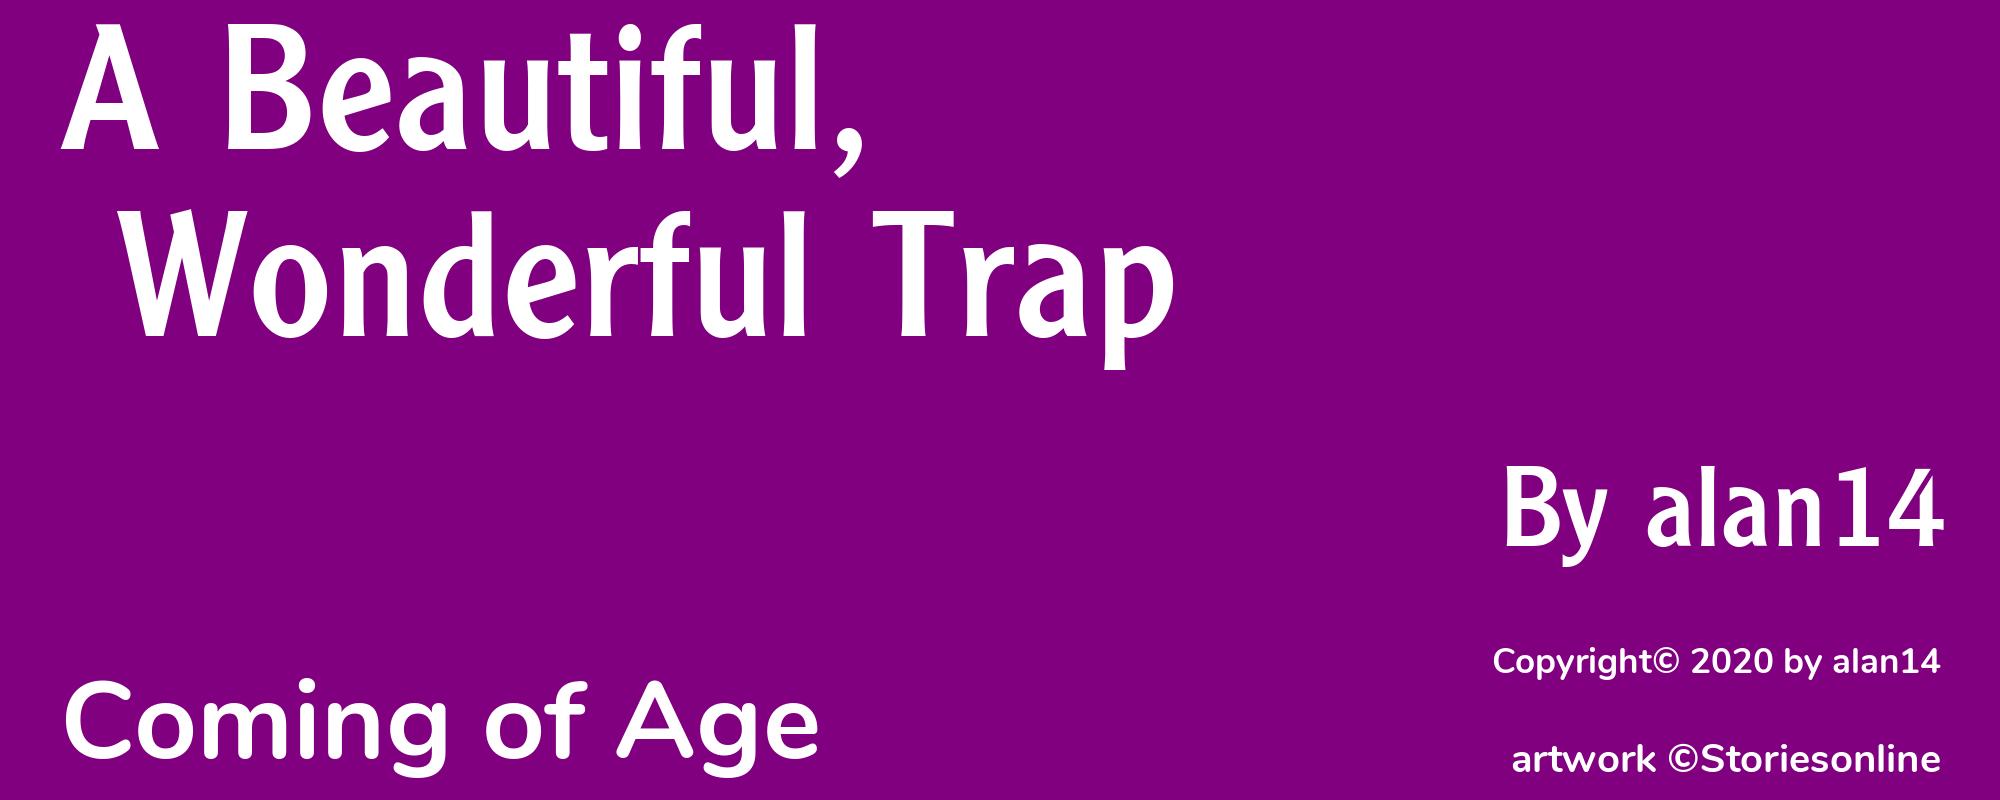 A Beautiful, Wonderful Trap - Cover